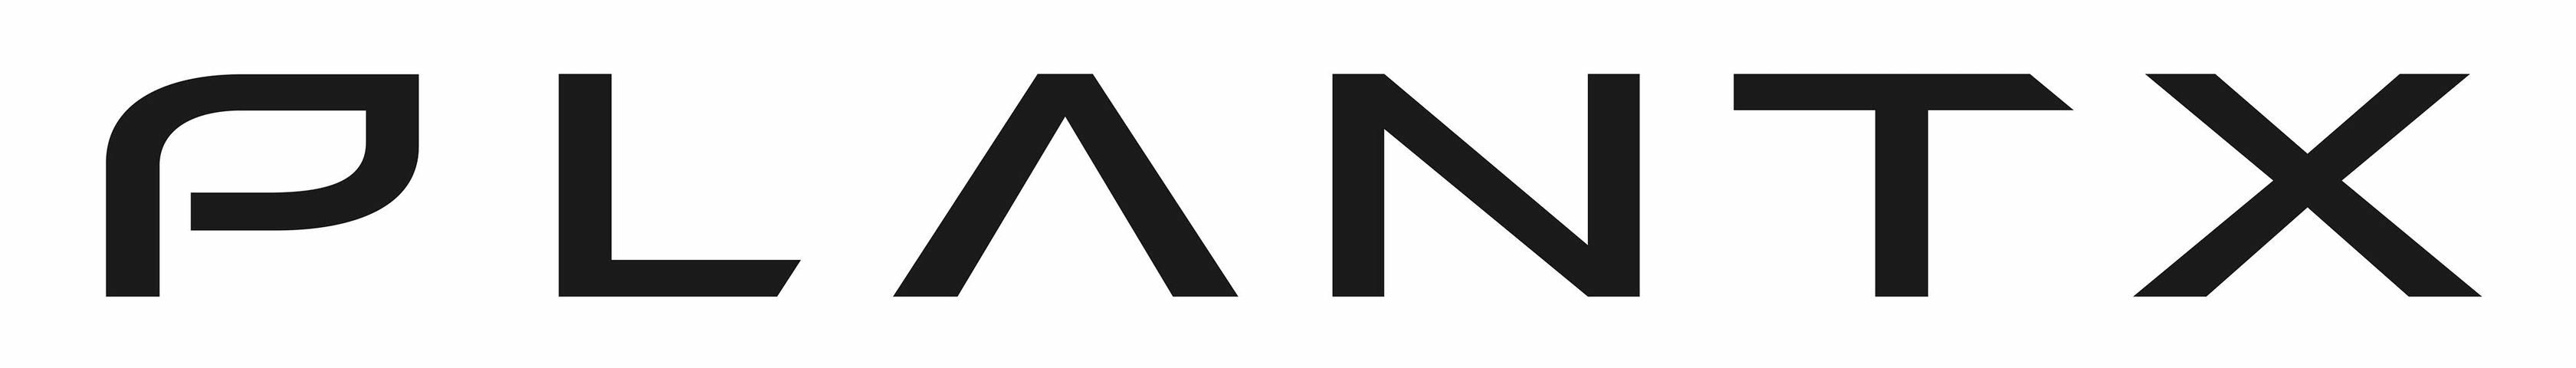 PLANTX logo - Dassault Systèmes®